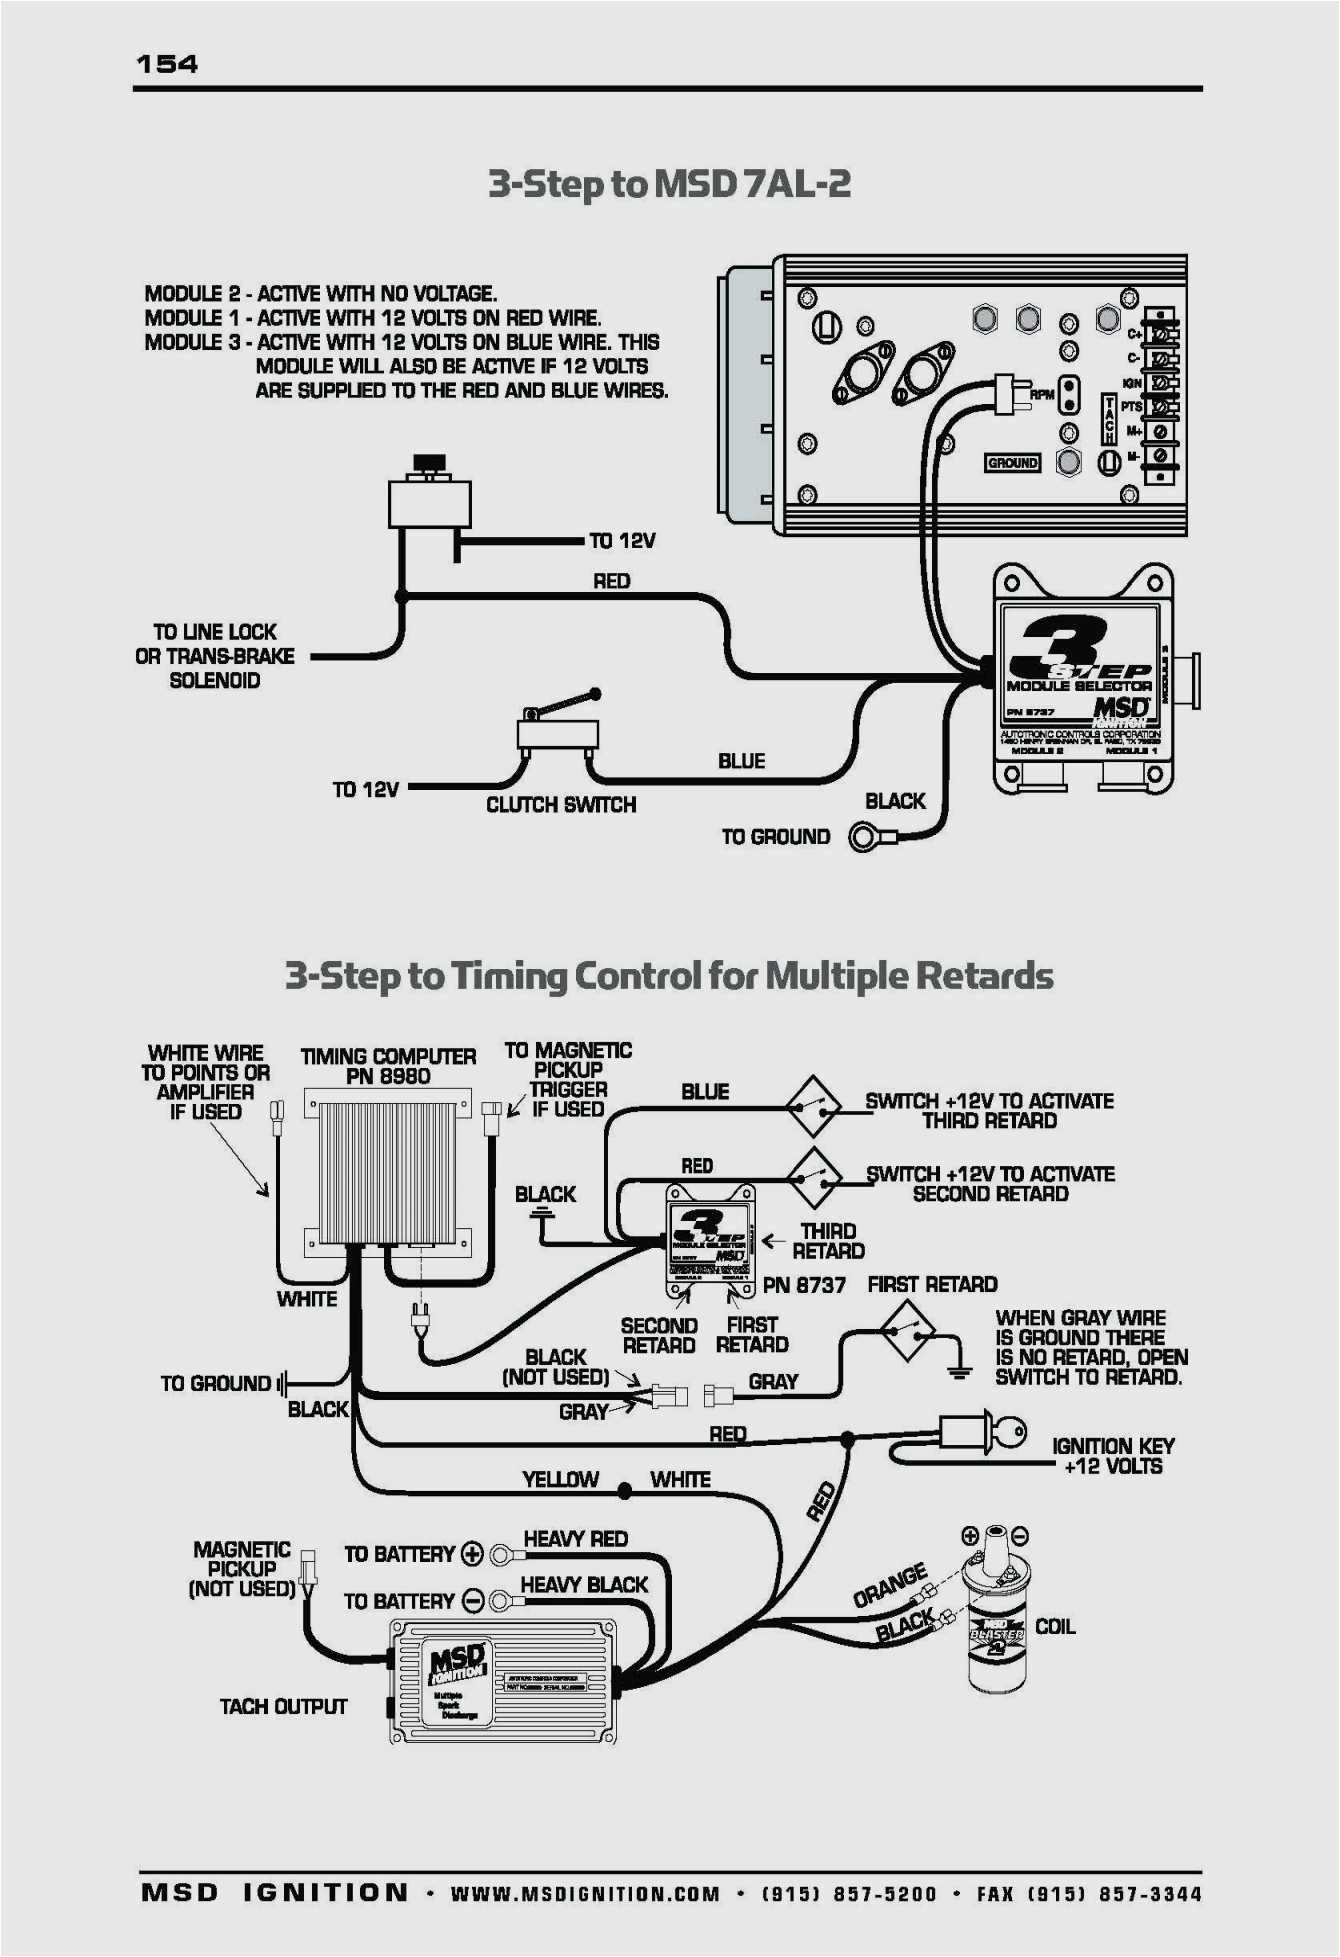 msd transmission wiring diagram wiring diagram technic